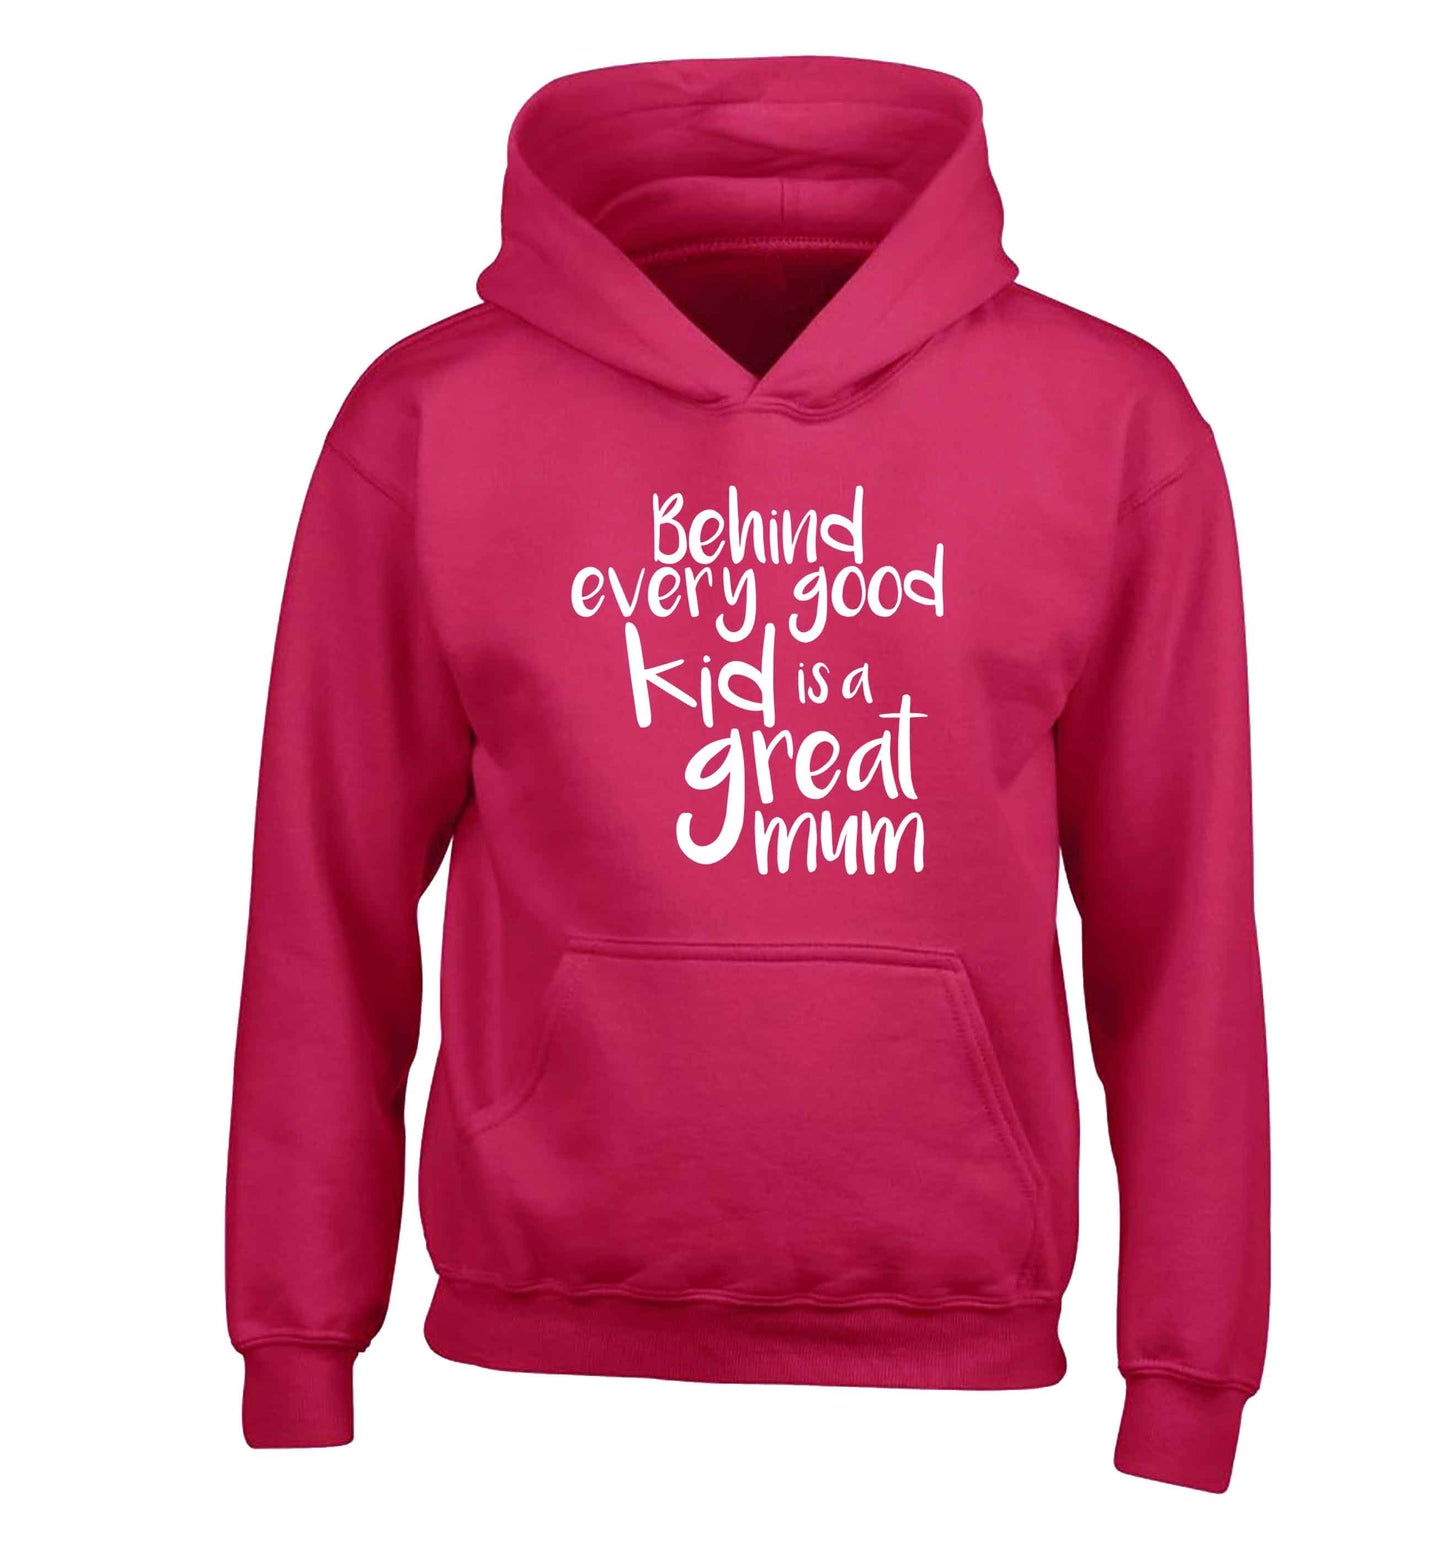 Behind every good kid is a great mum children's pink hoodie 12-13 Years